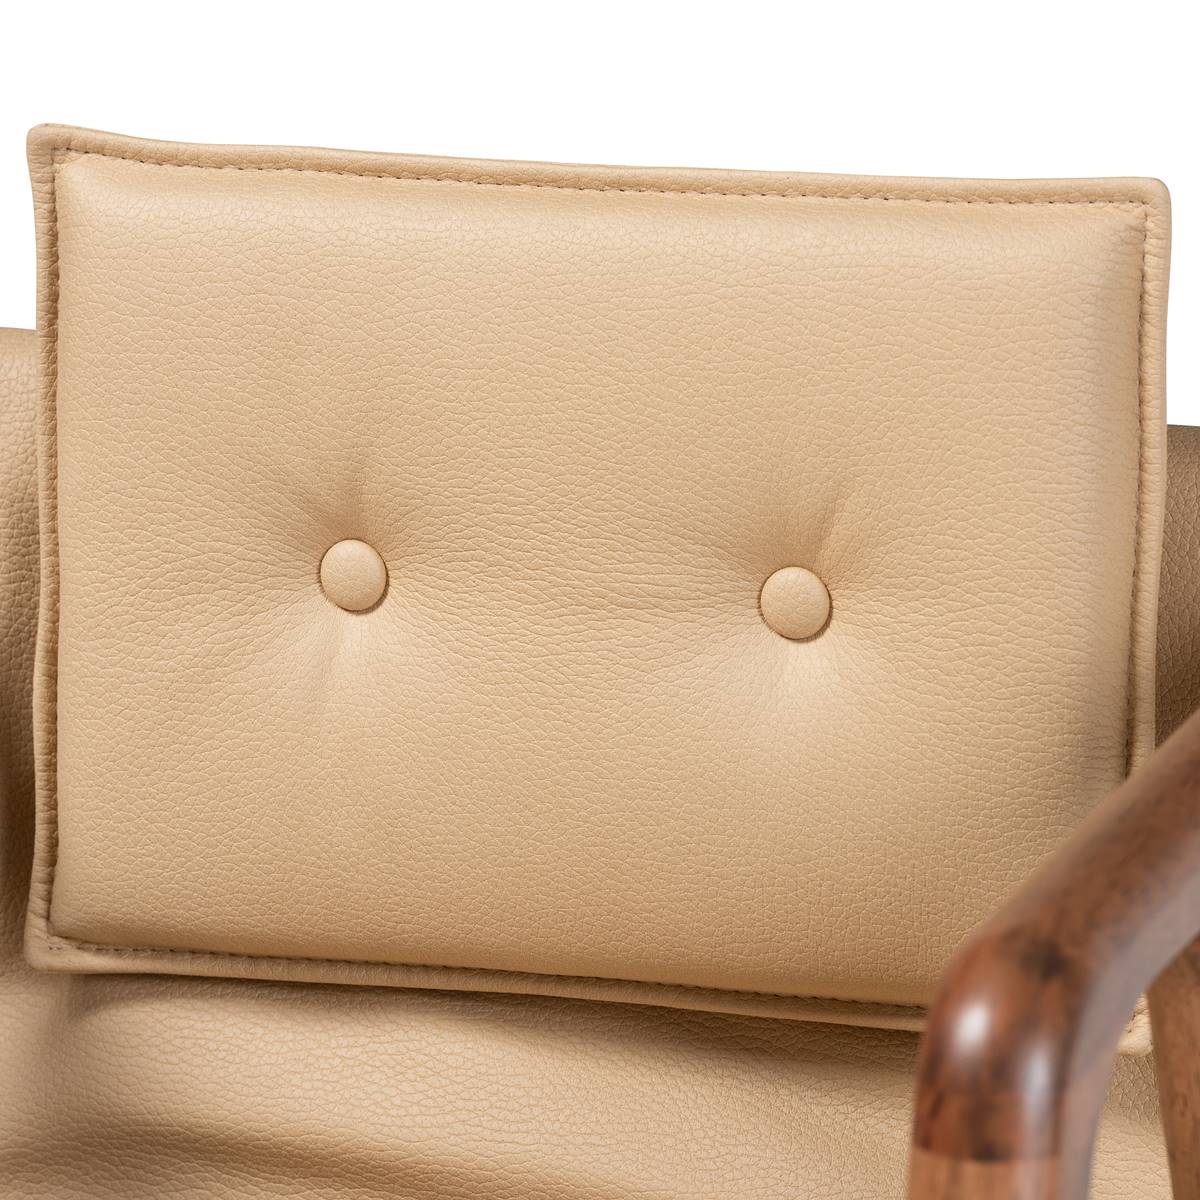 Baxton Studio Marcena Imitation Leather 2pc. Dining Chair Set